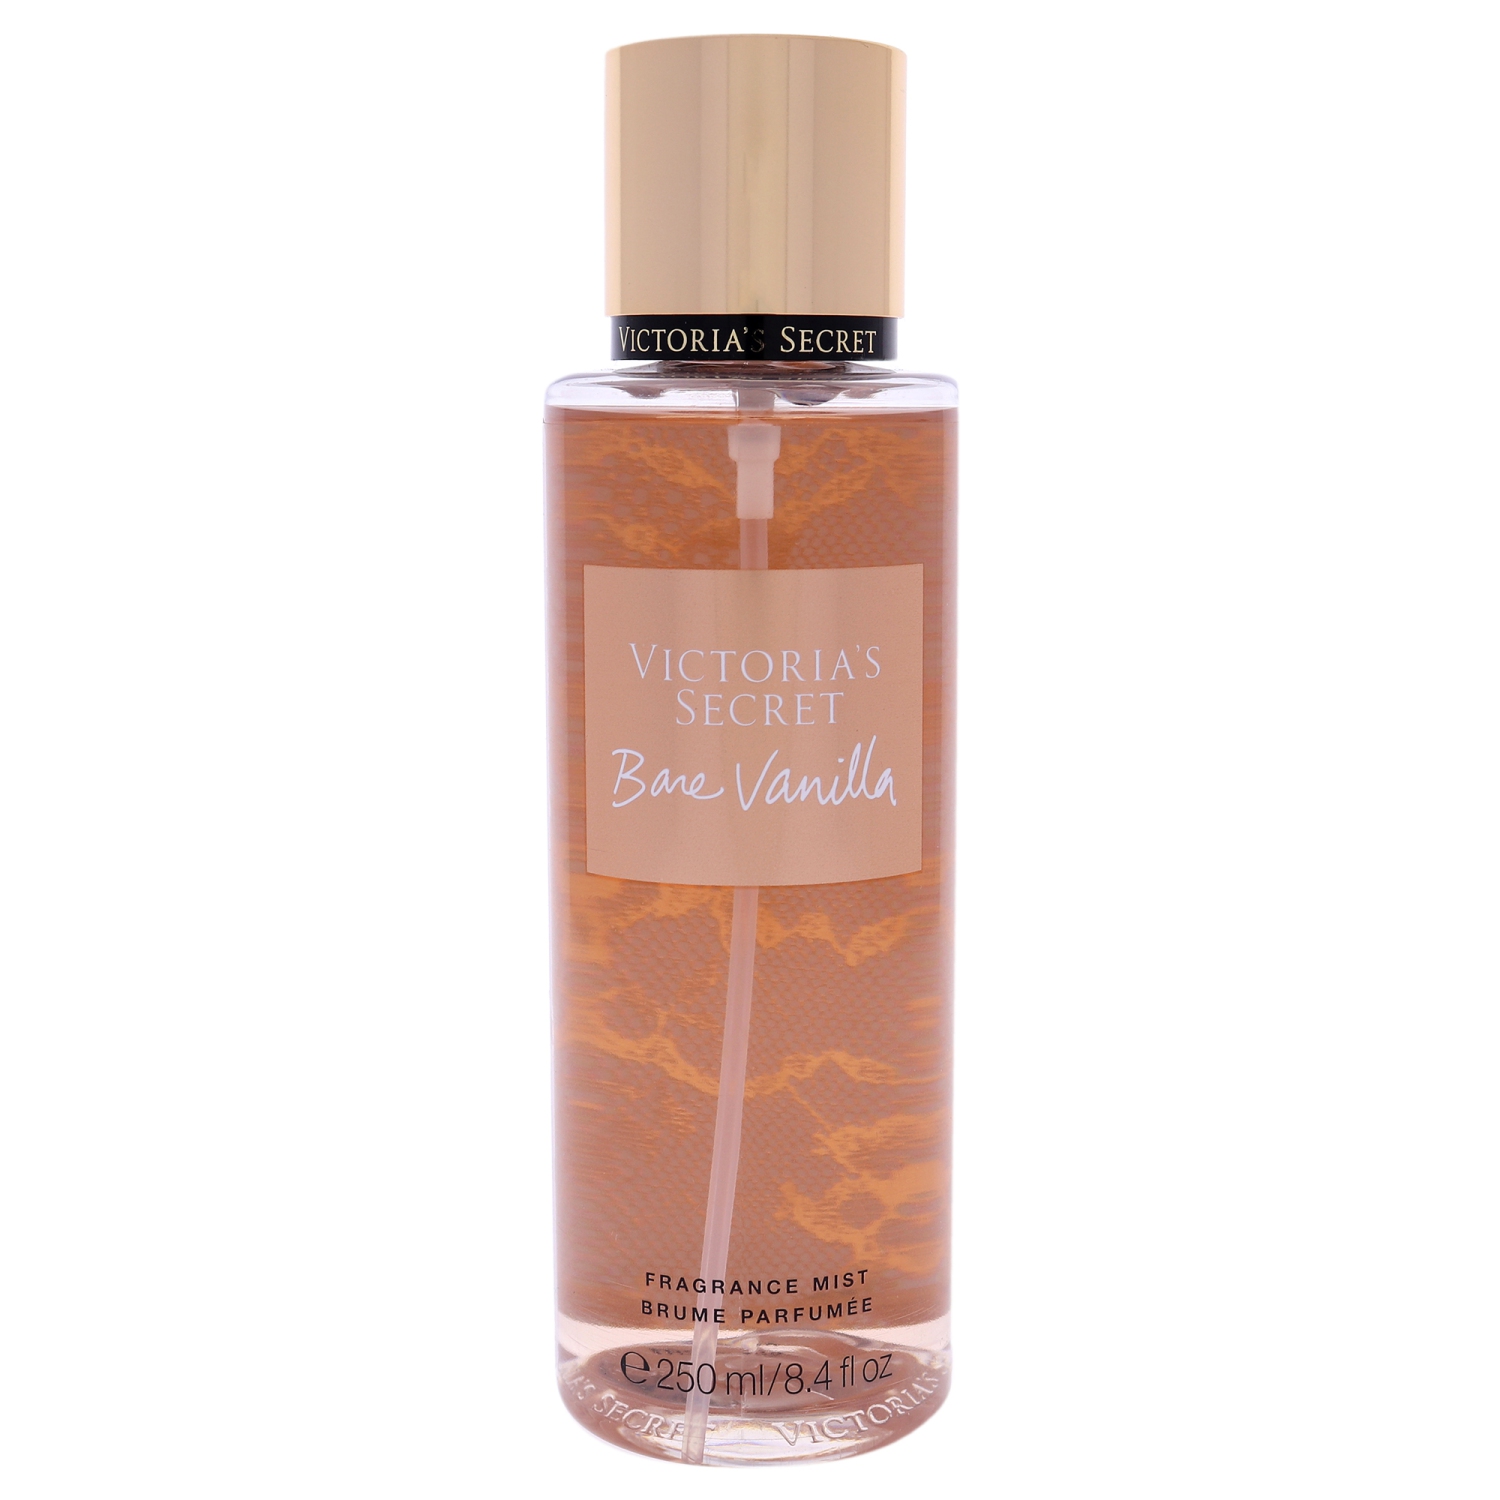 Bare Vanilla Fragrance Mist by Victorias Secret for Women - 8.4 oz 